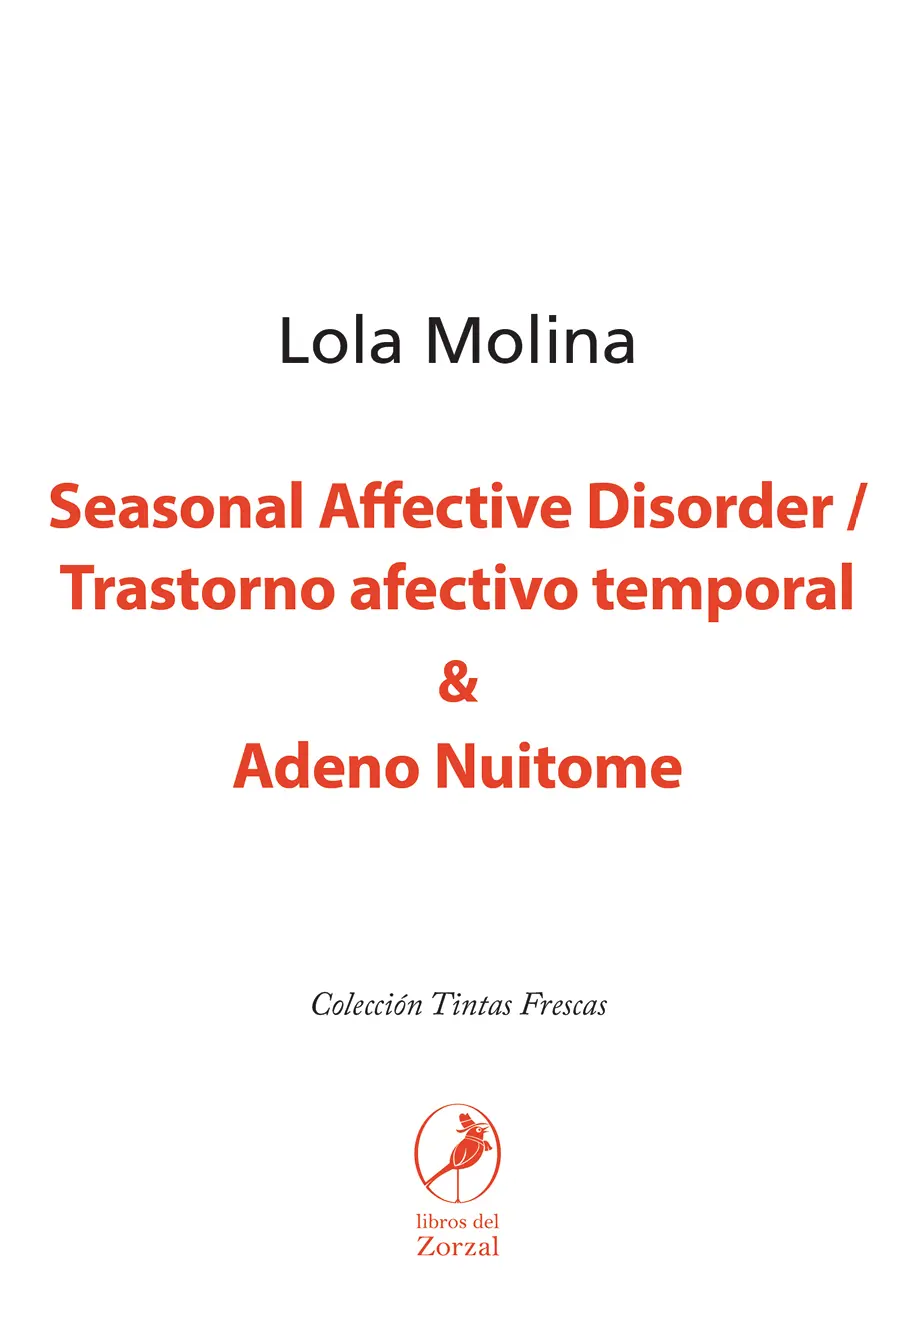 Lola Molina Seasonal Affective Disorder Trastorno afectivo temporal Adeno - фото 1